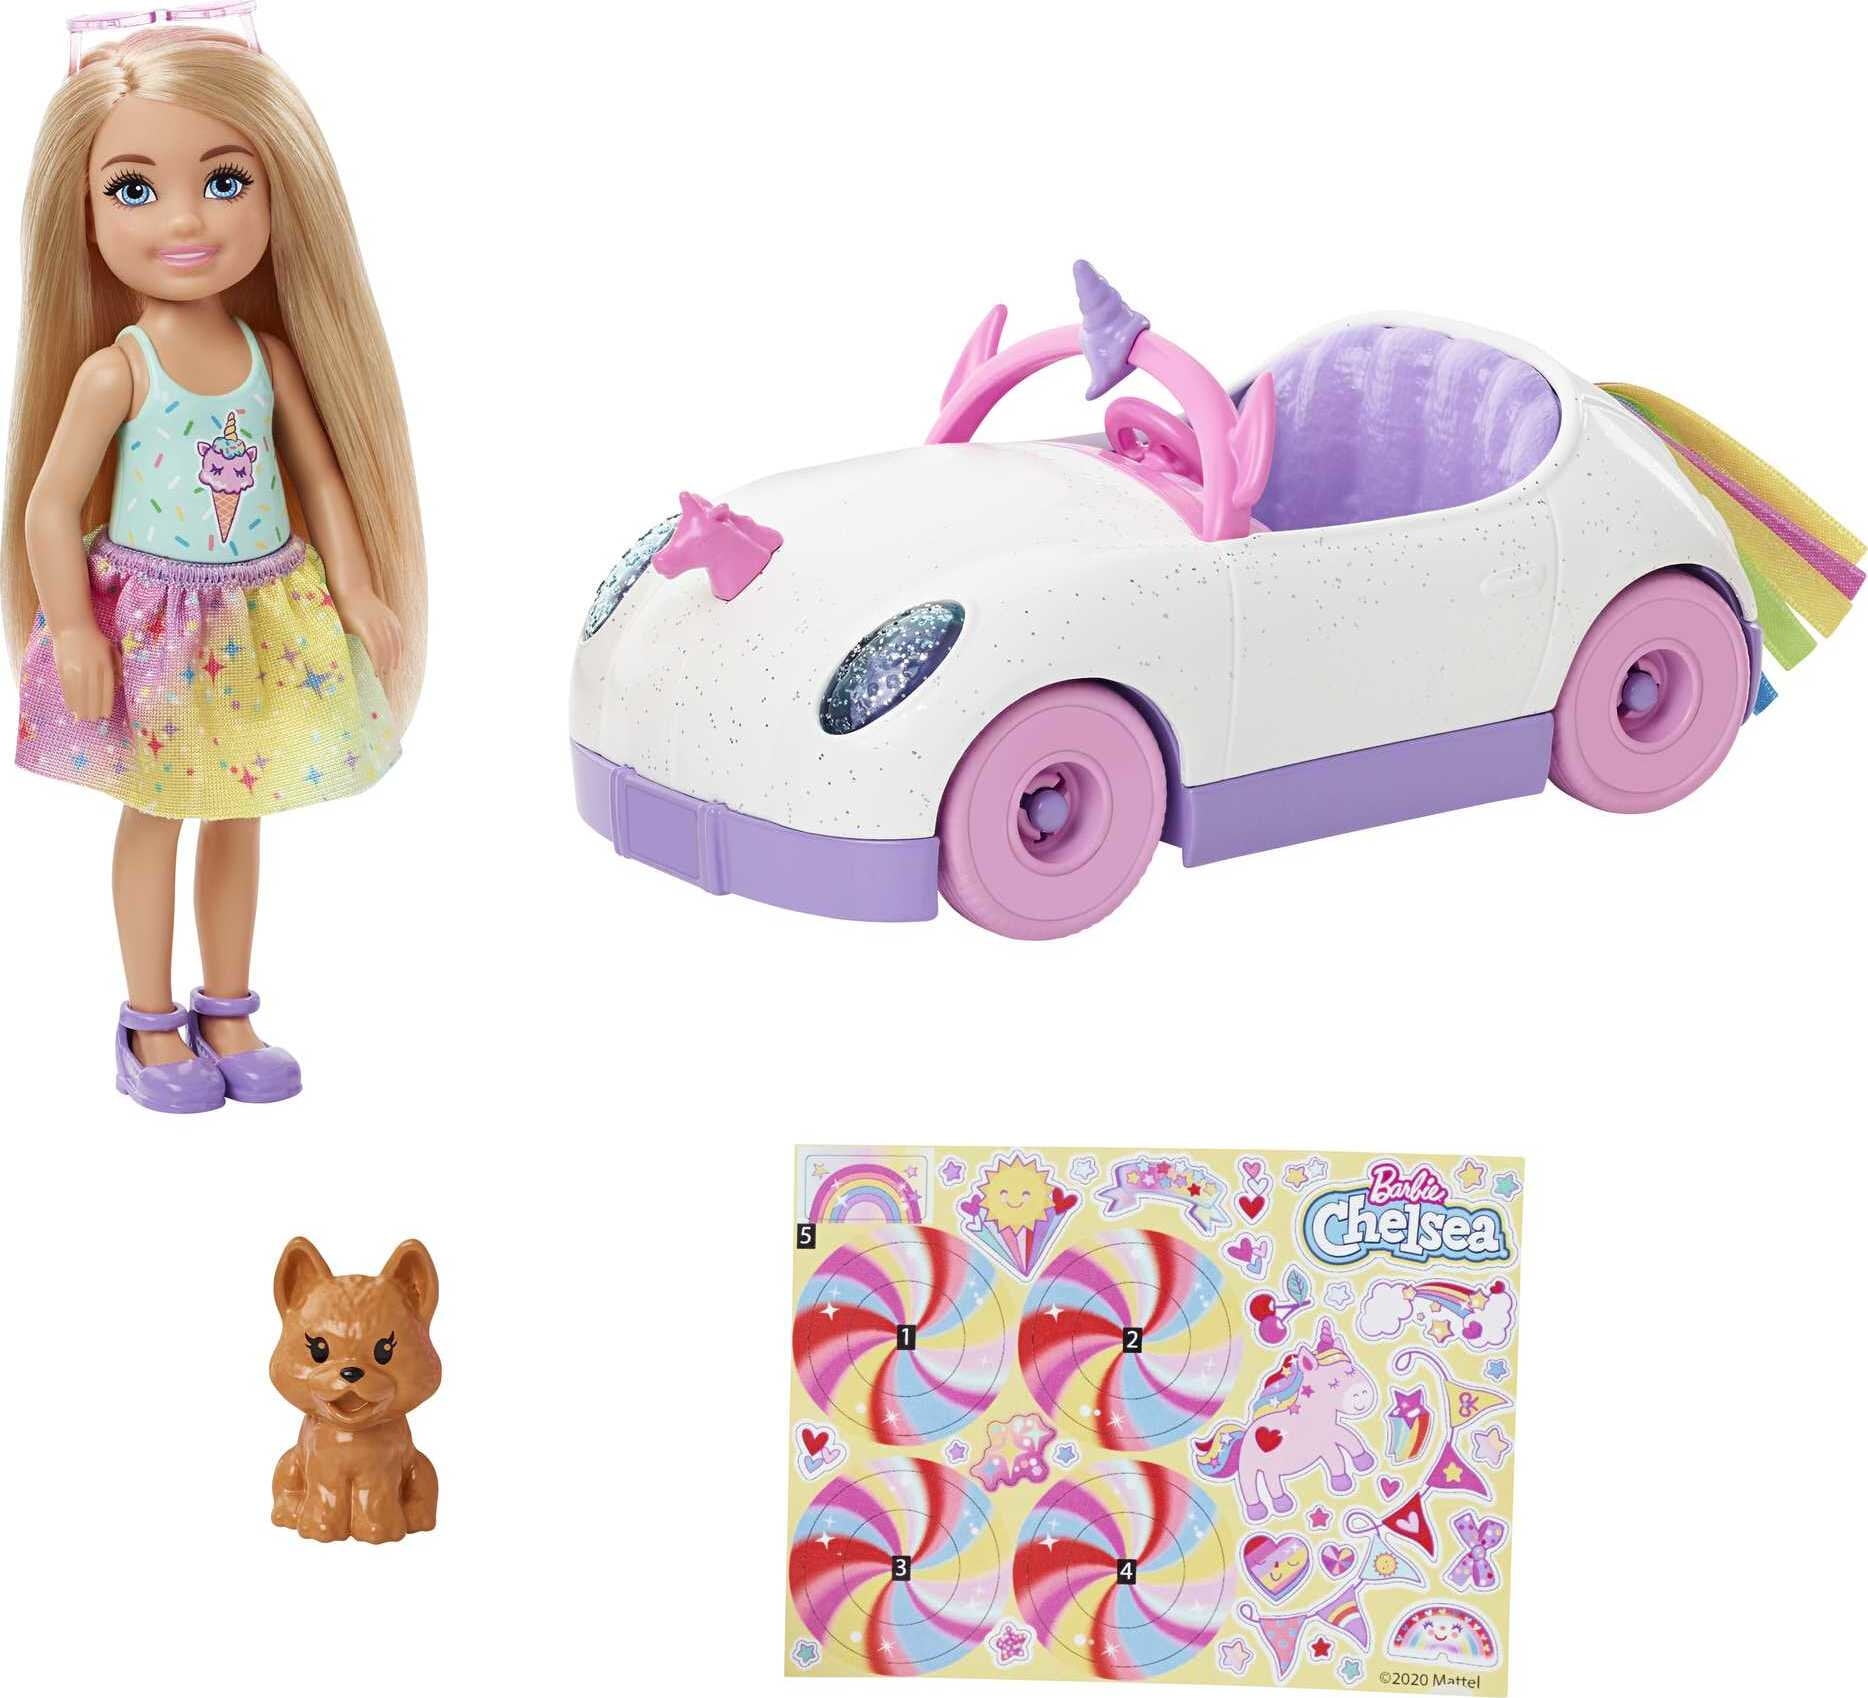 Koning Lear slang Op de grond Barbie Club Chelsea Doll & Toy Car, Unicorn Theme, Blonde Small Doll,  Puppy, Stickers & Accessories - Walmart.com